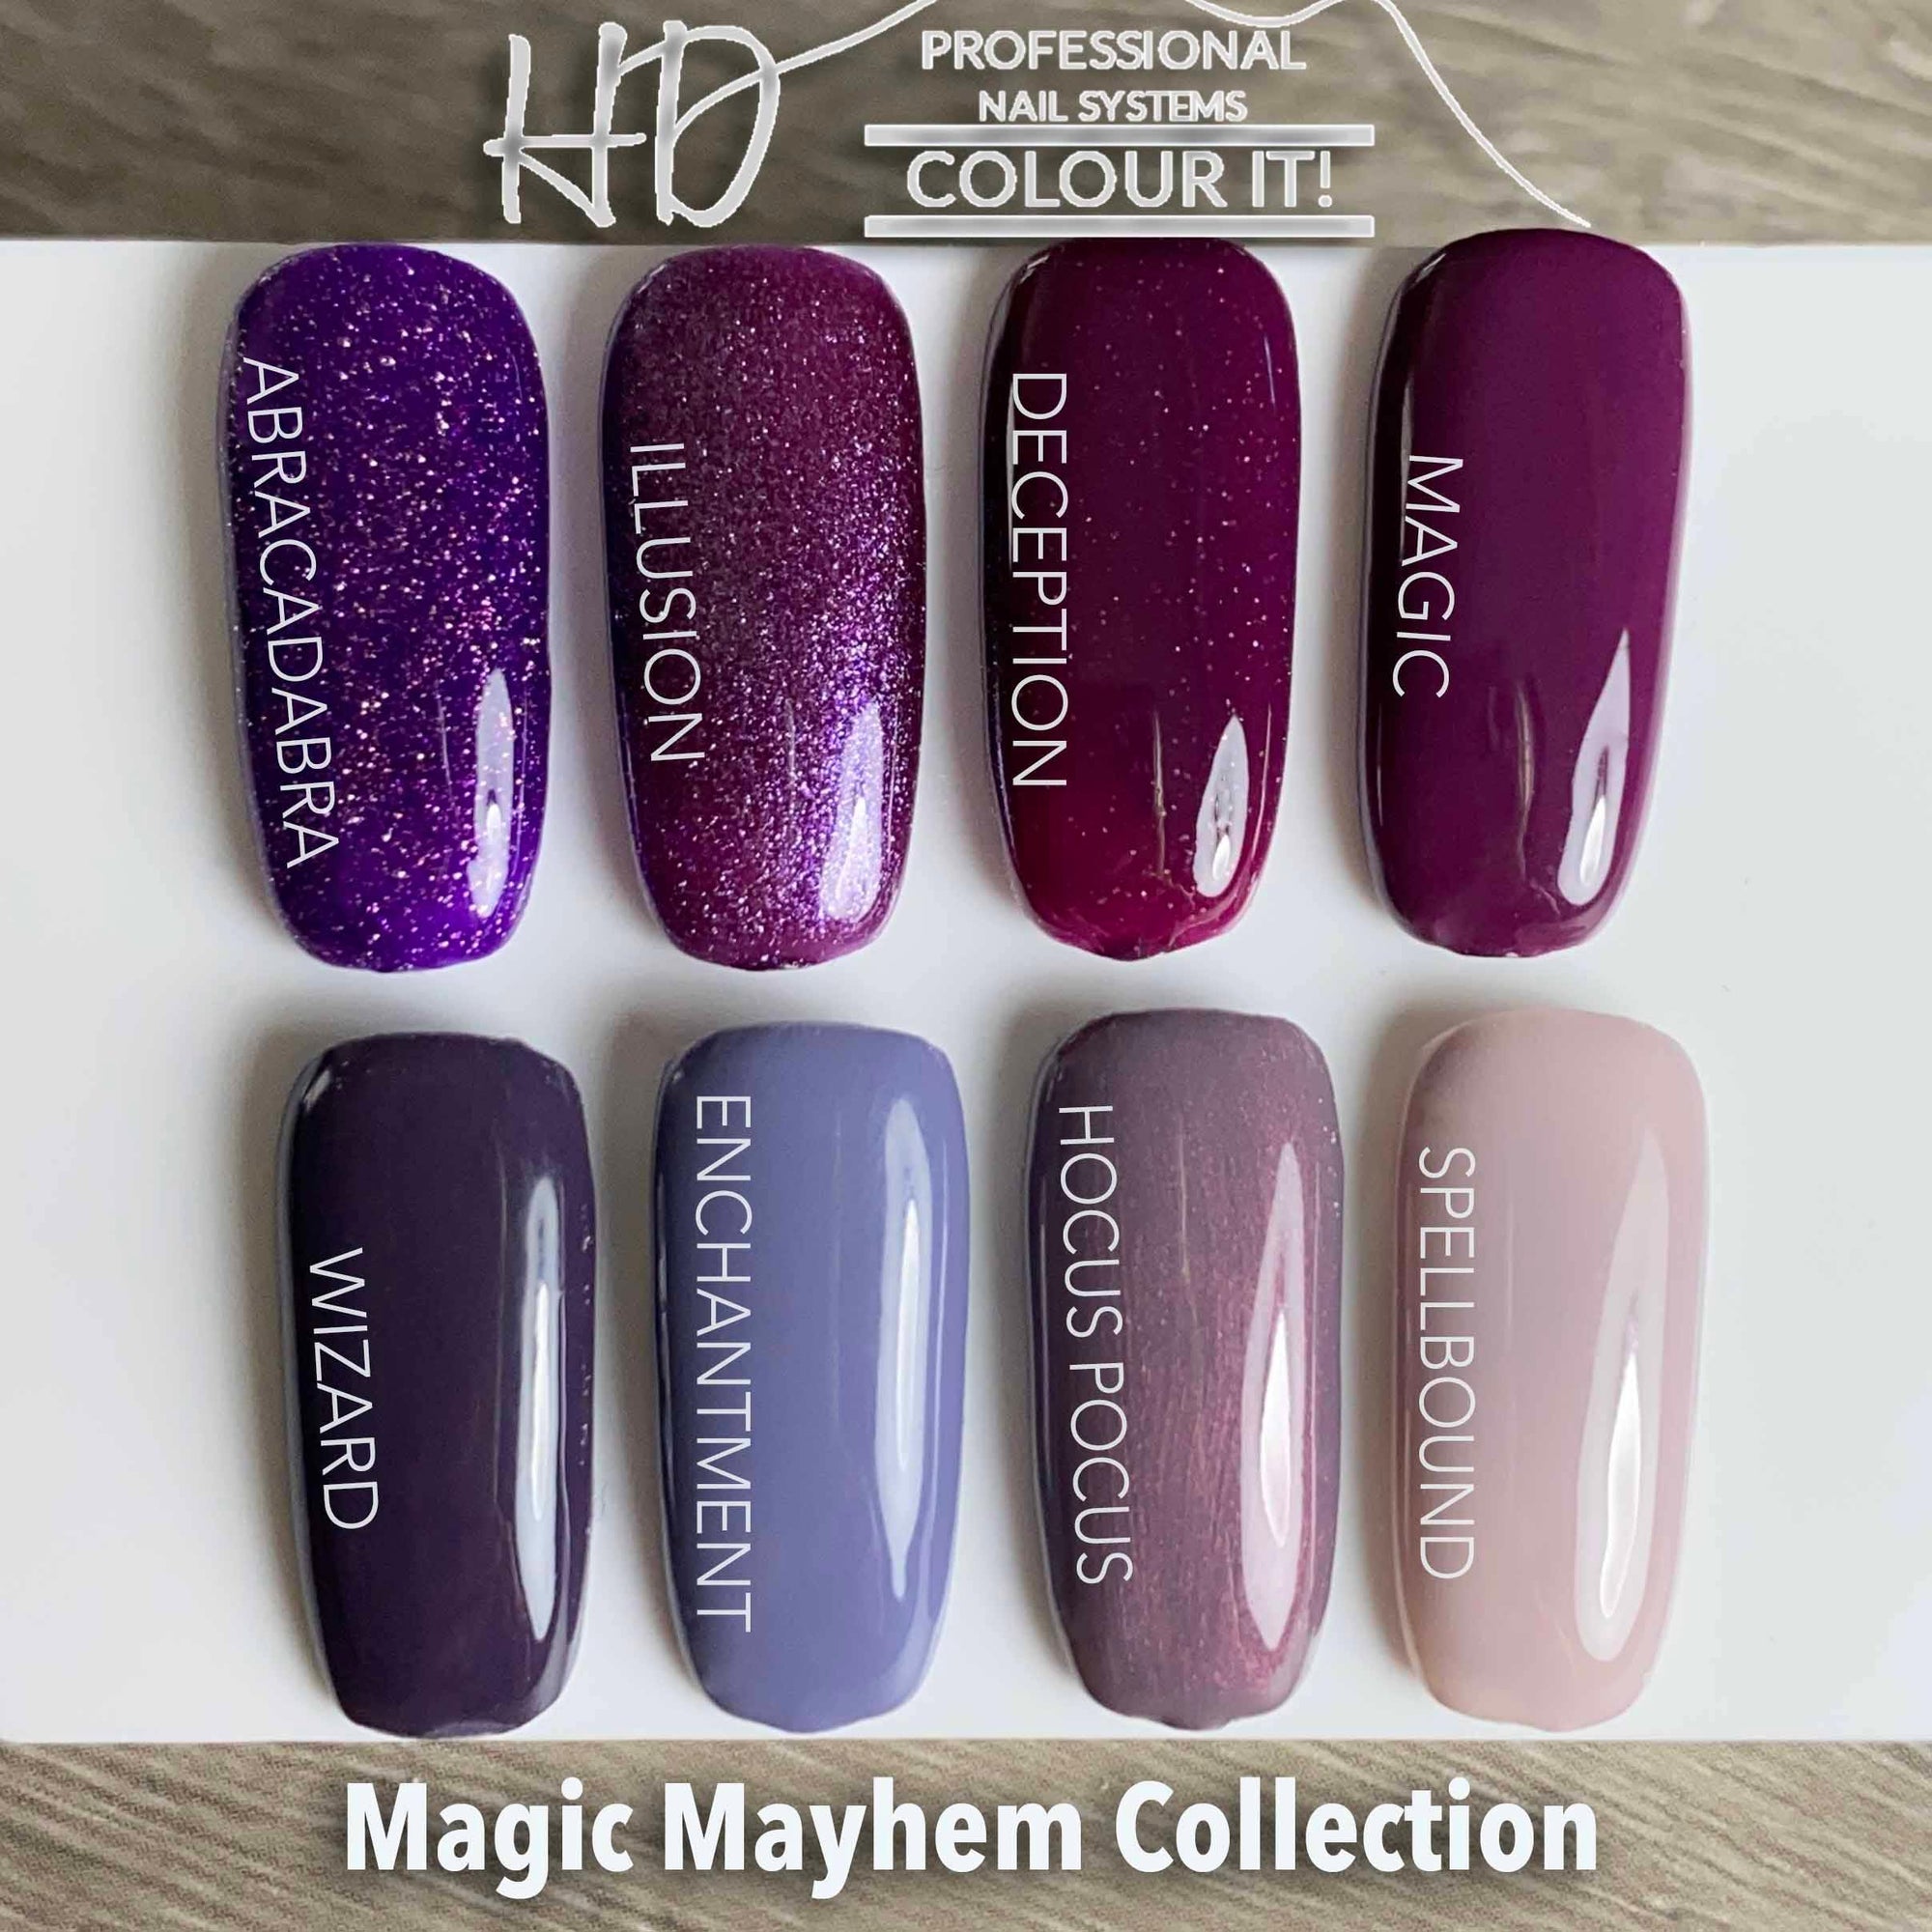 HD Colour It! Magical Mayhem Collection (all 8 colors 15ml) - Gel Essentialz